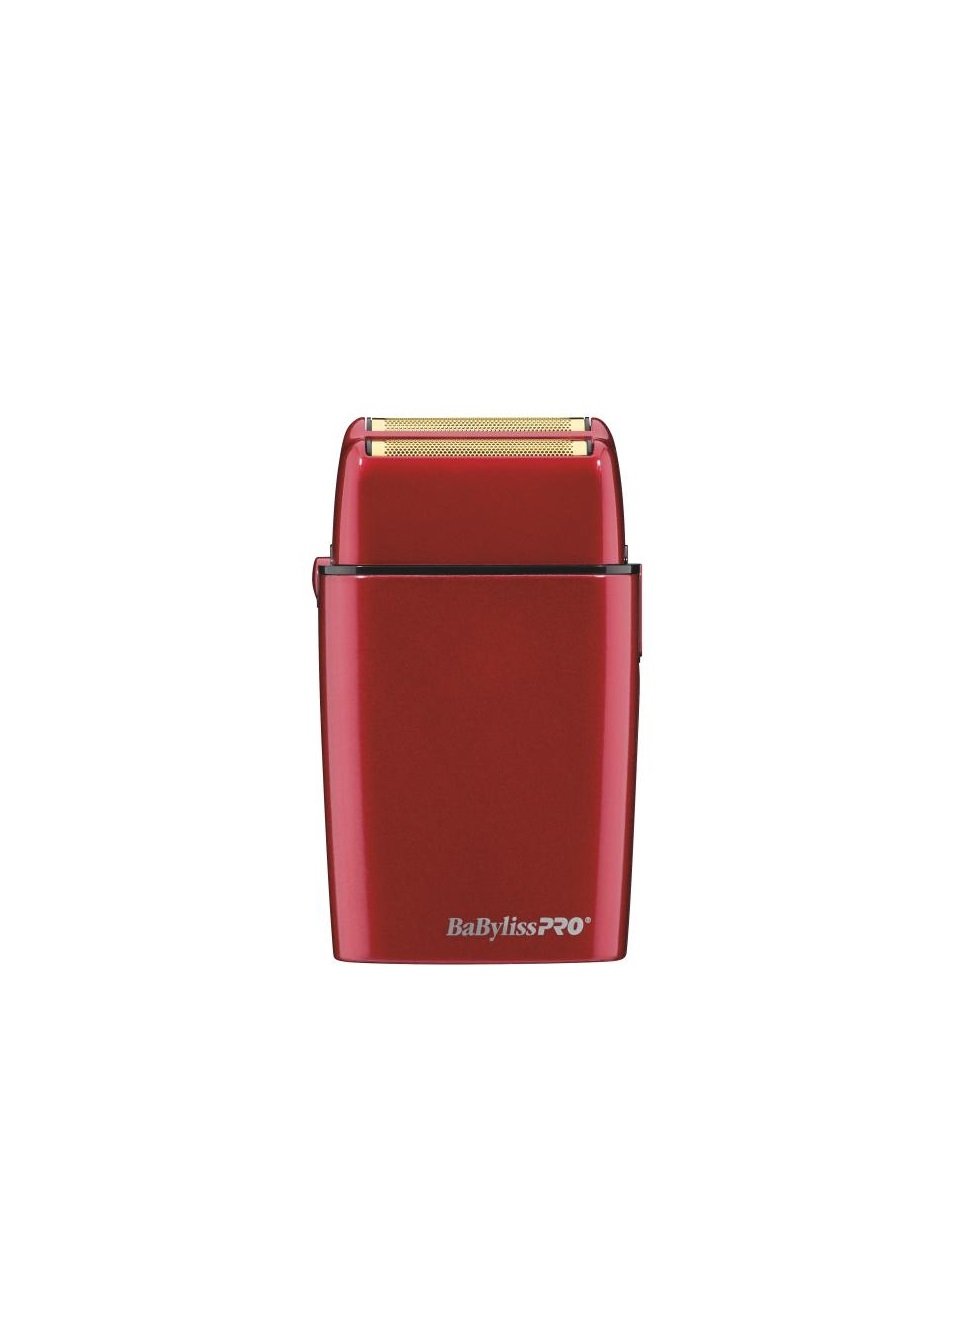 BaBylissPRO Red Double Foil Shaver FXFS2R 8786